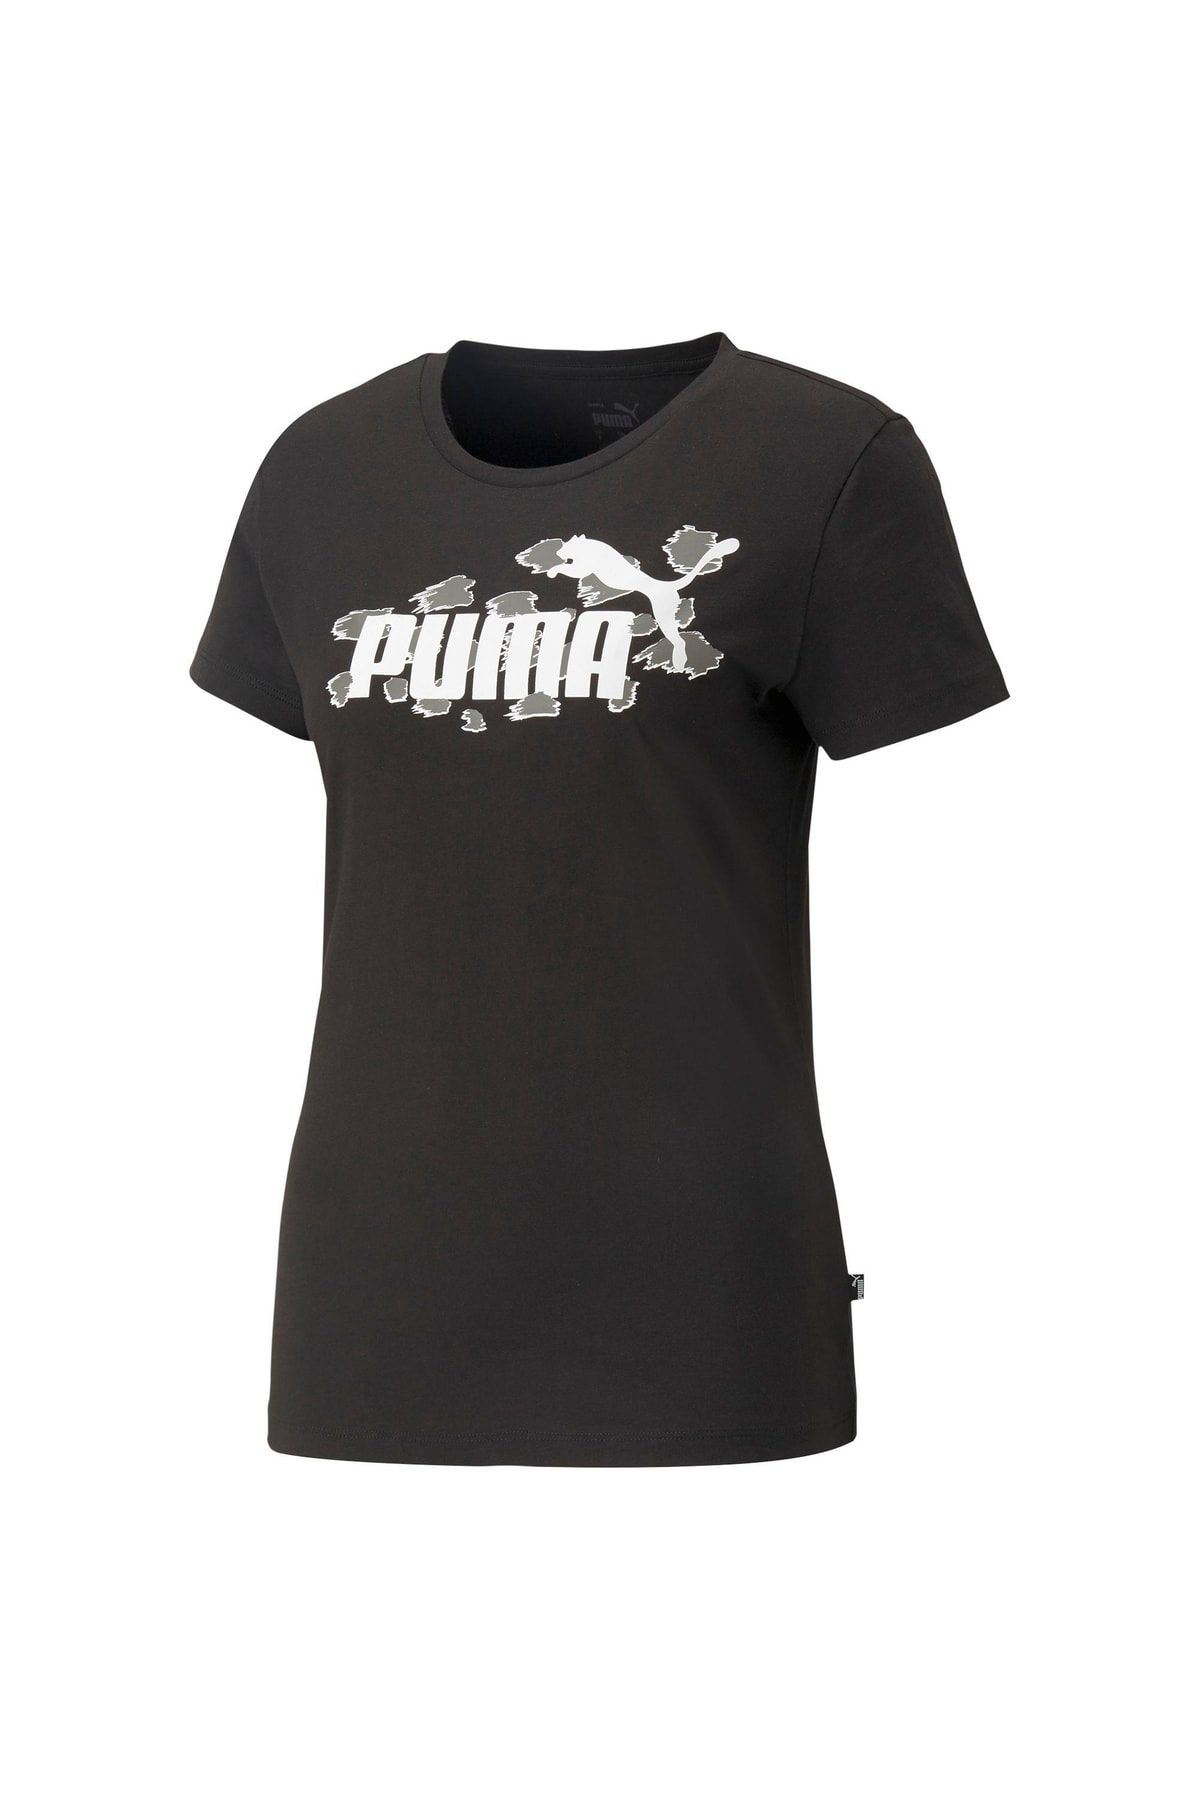 Puma Ess+ Animal Trendyol - Tee Women\'s - Black T-Shirt